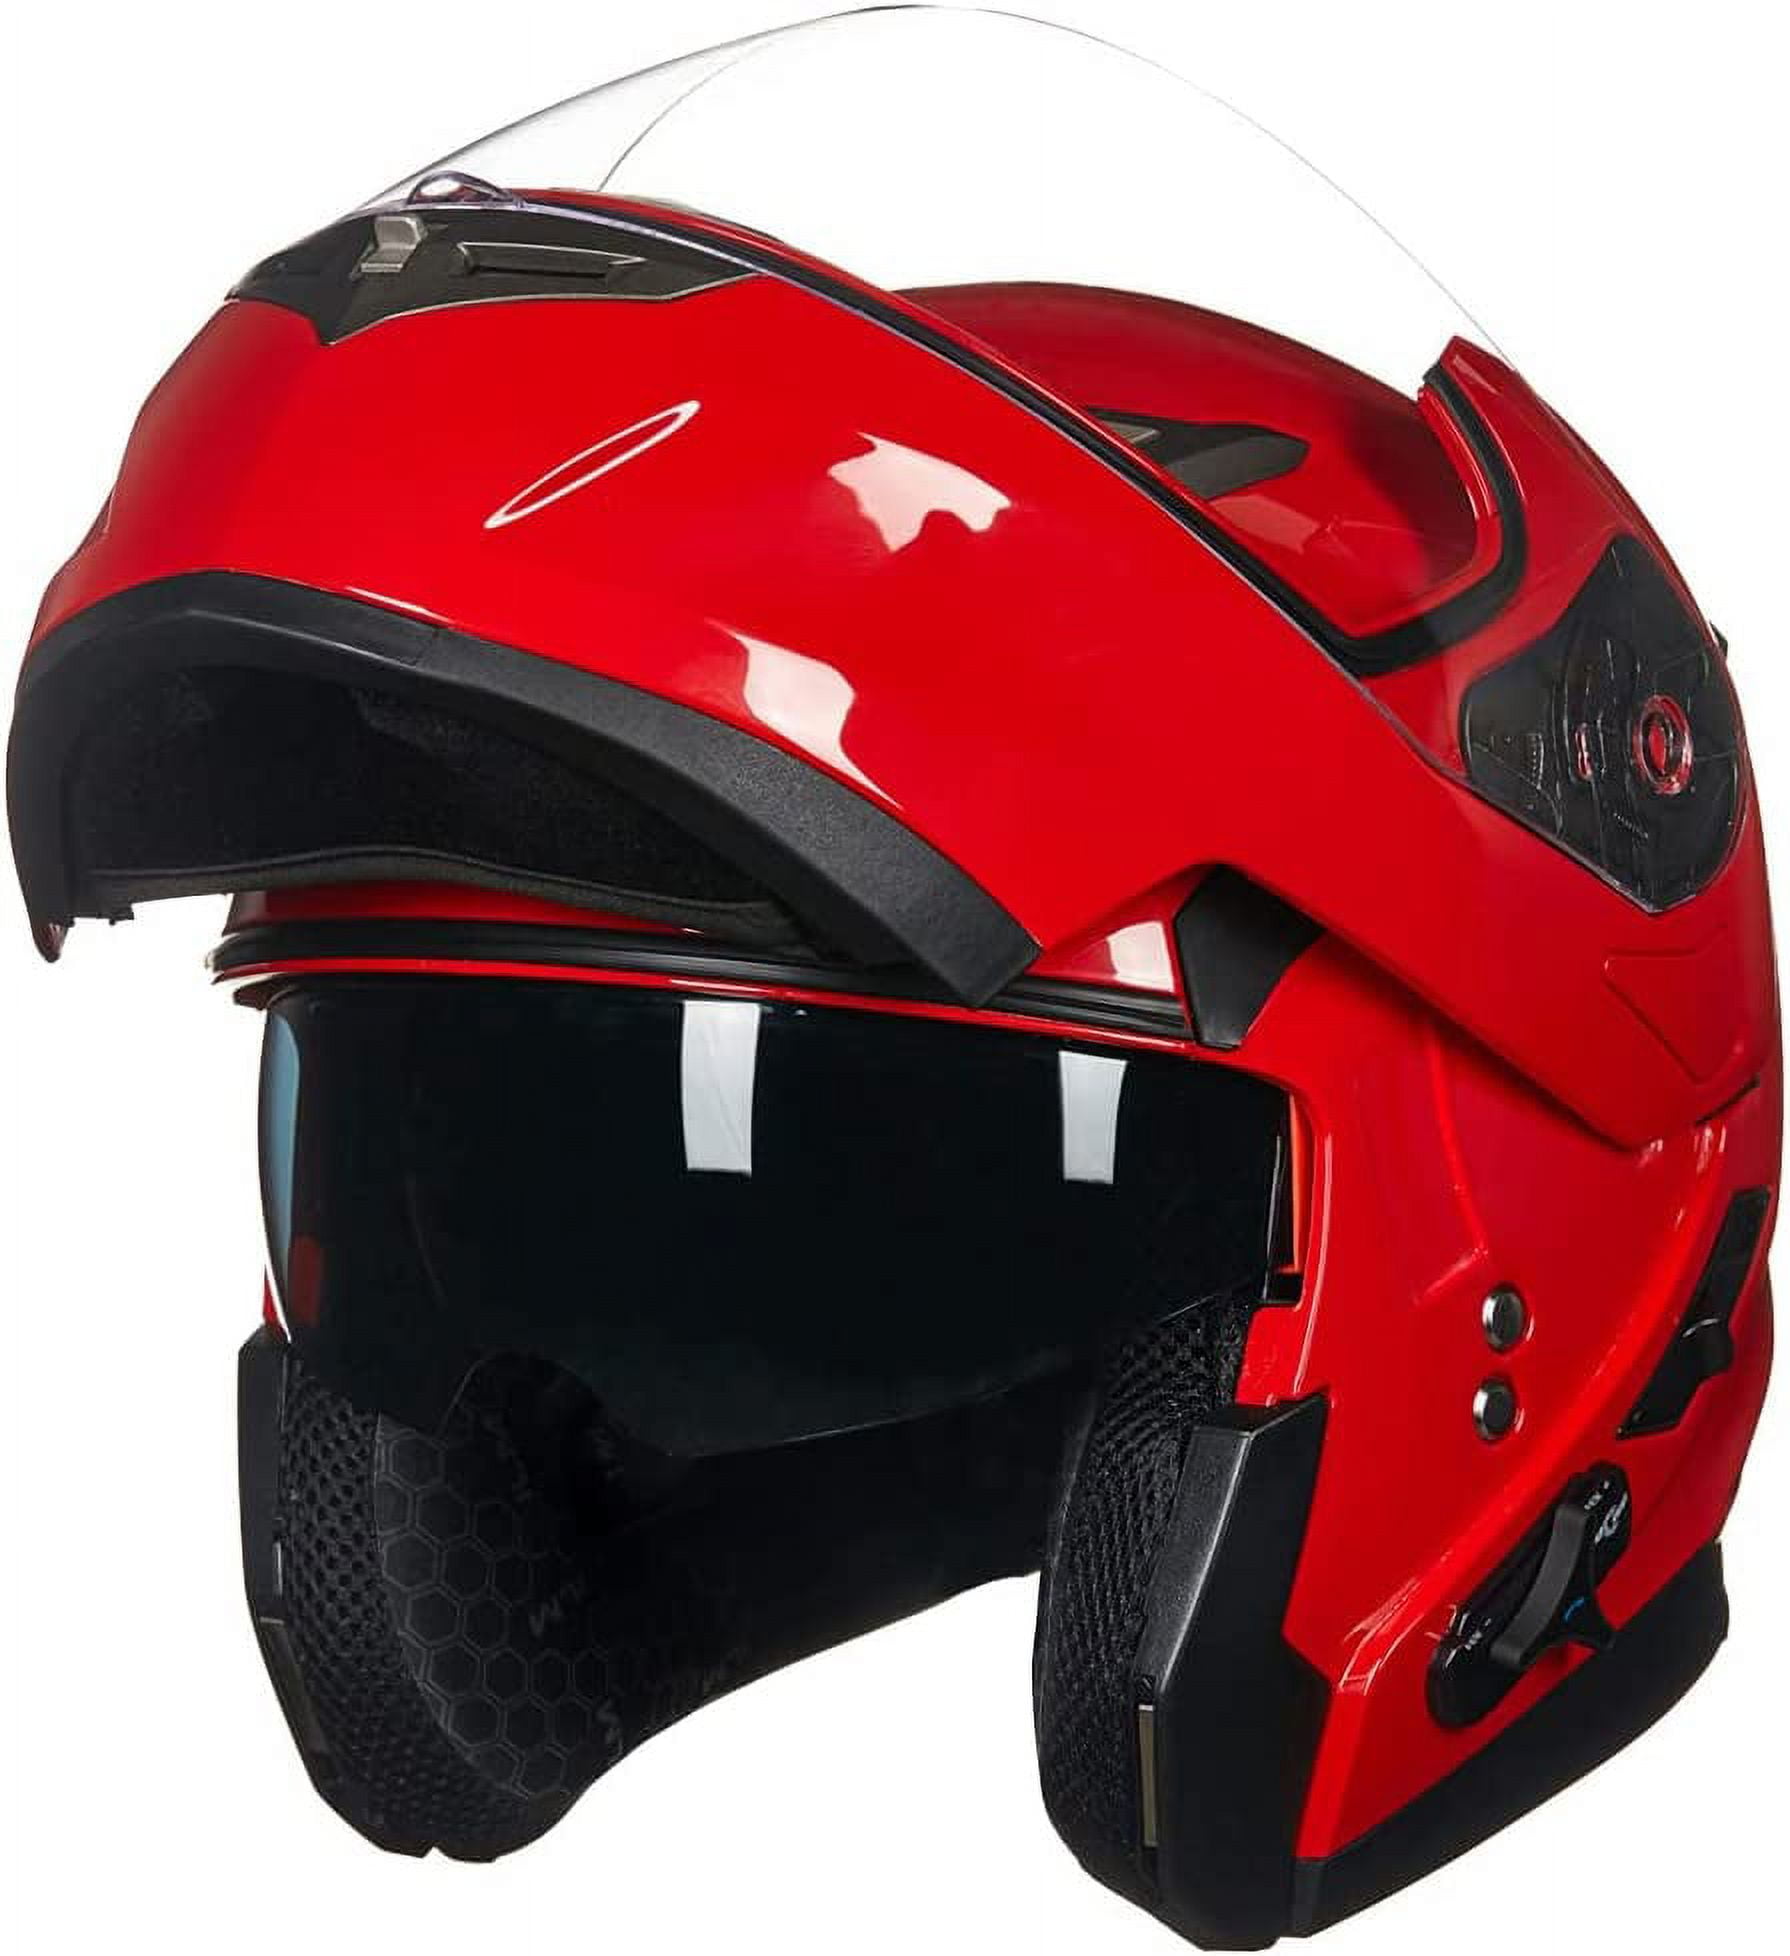 ILM Modular Flip Up Full Face Motorcycle Helmet Bluetooth